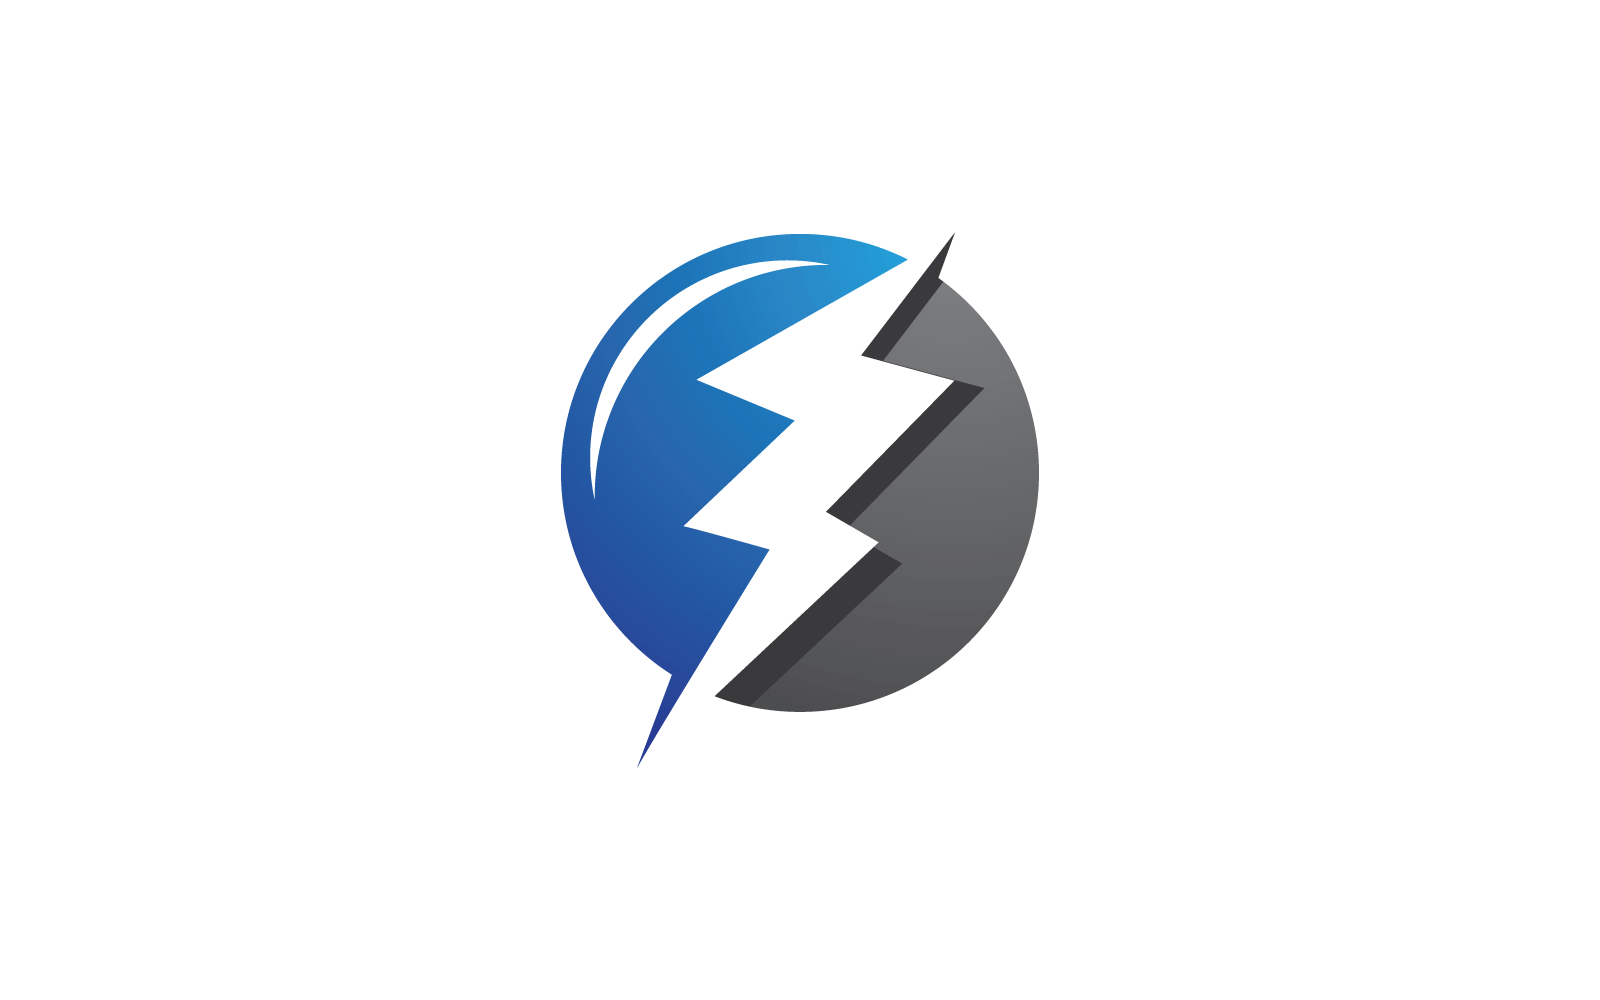 Power lightning power energy logo icon vector